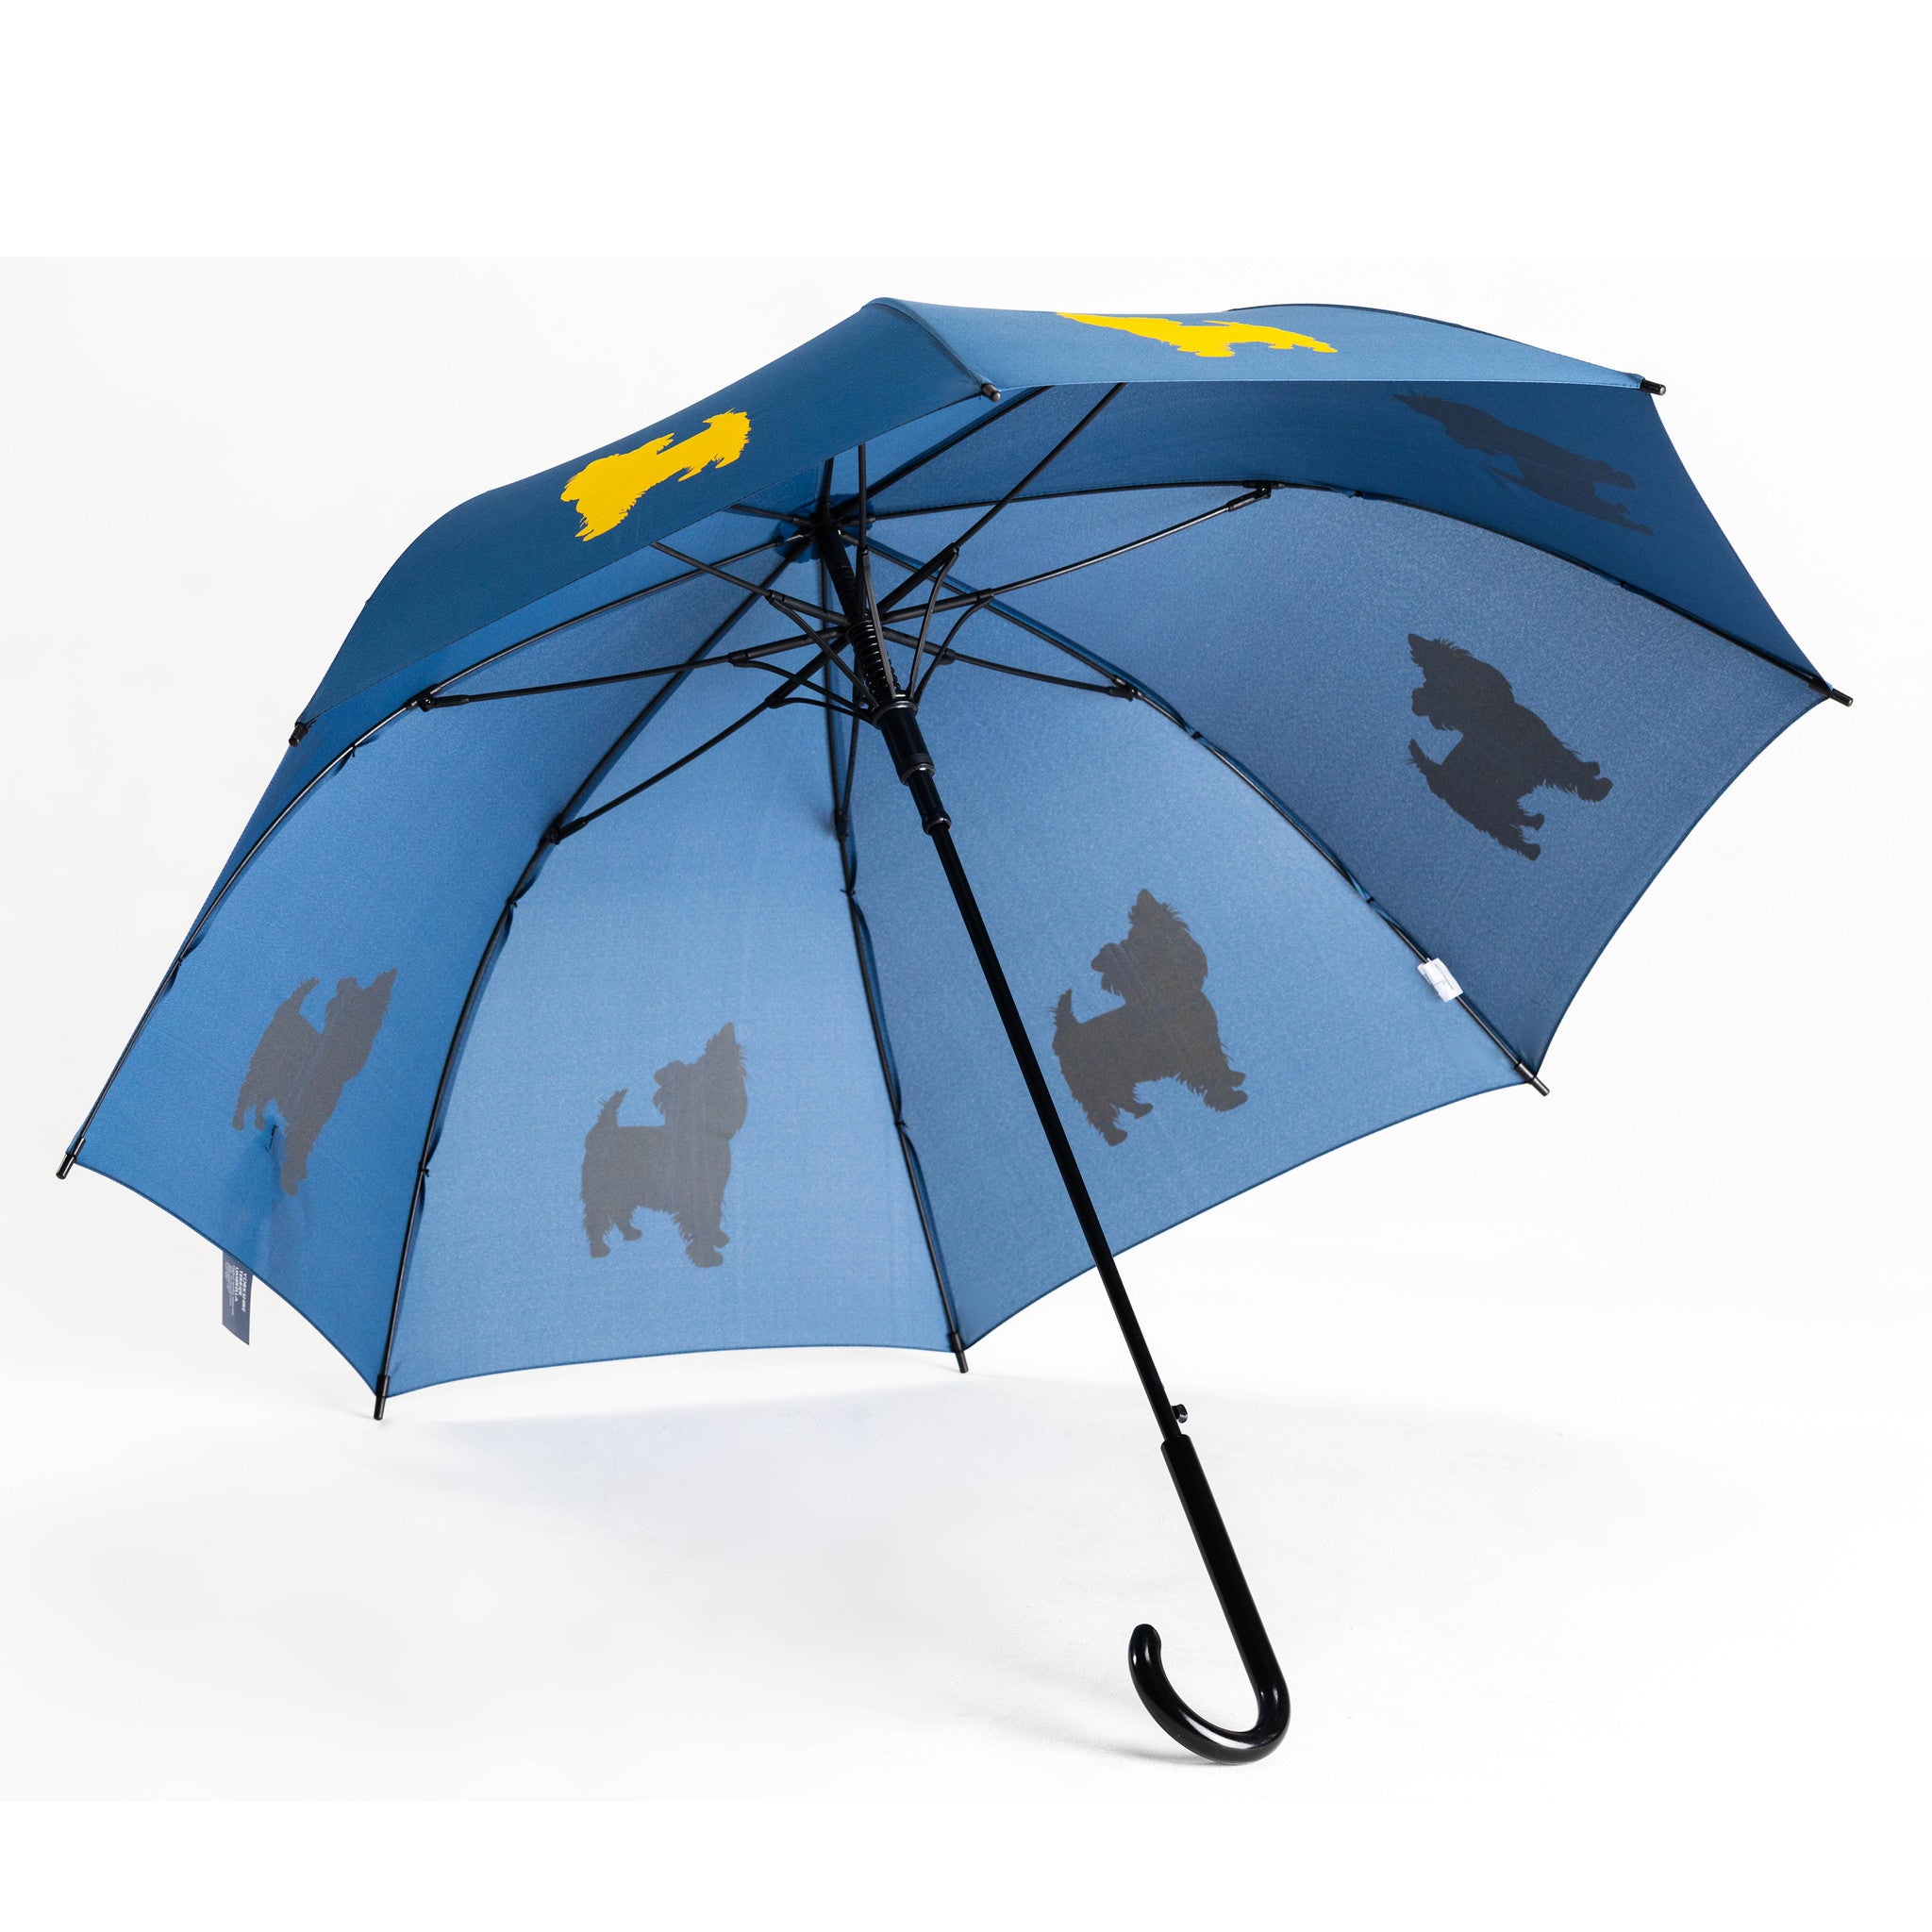 Yorkshire Terrier Auto Open Umbrella | Yellow on Navy Blue